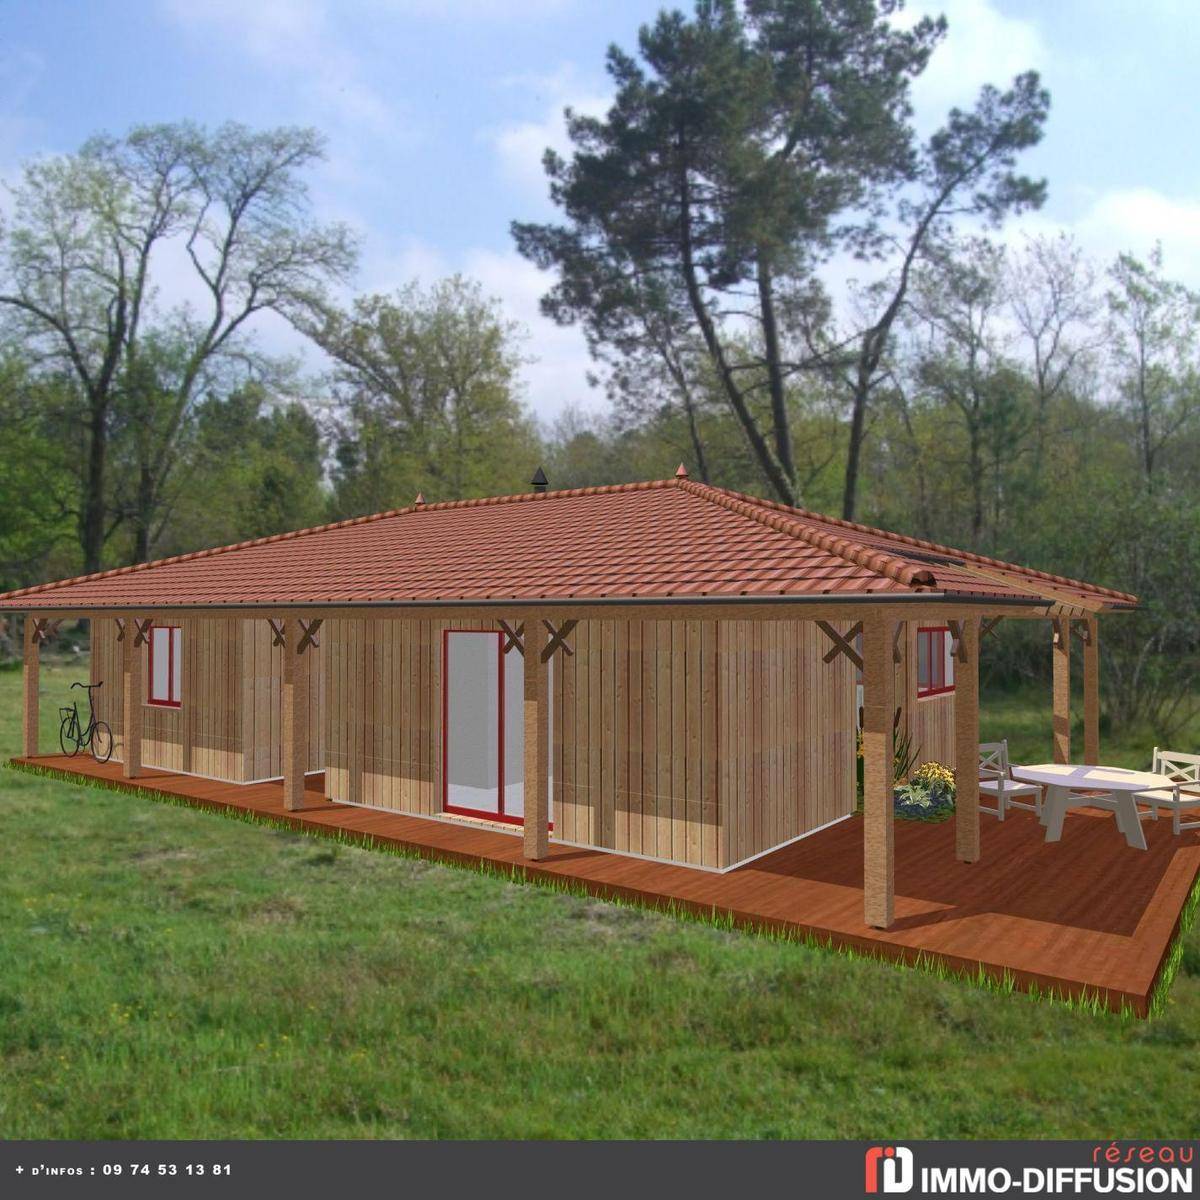 Terrain seul à Roaillan en Gironde (33) de 846 m² à vendre au prix de 64900€ - 1